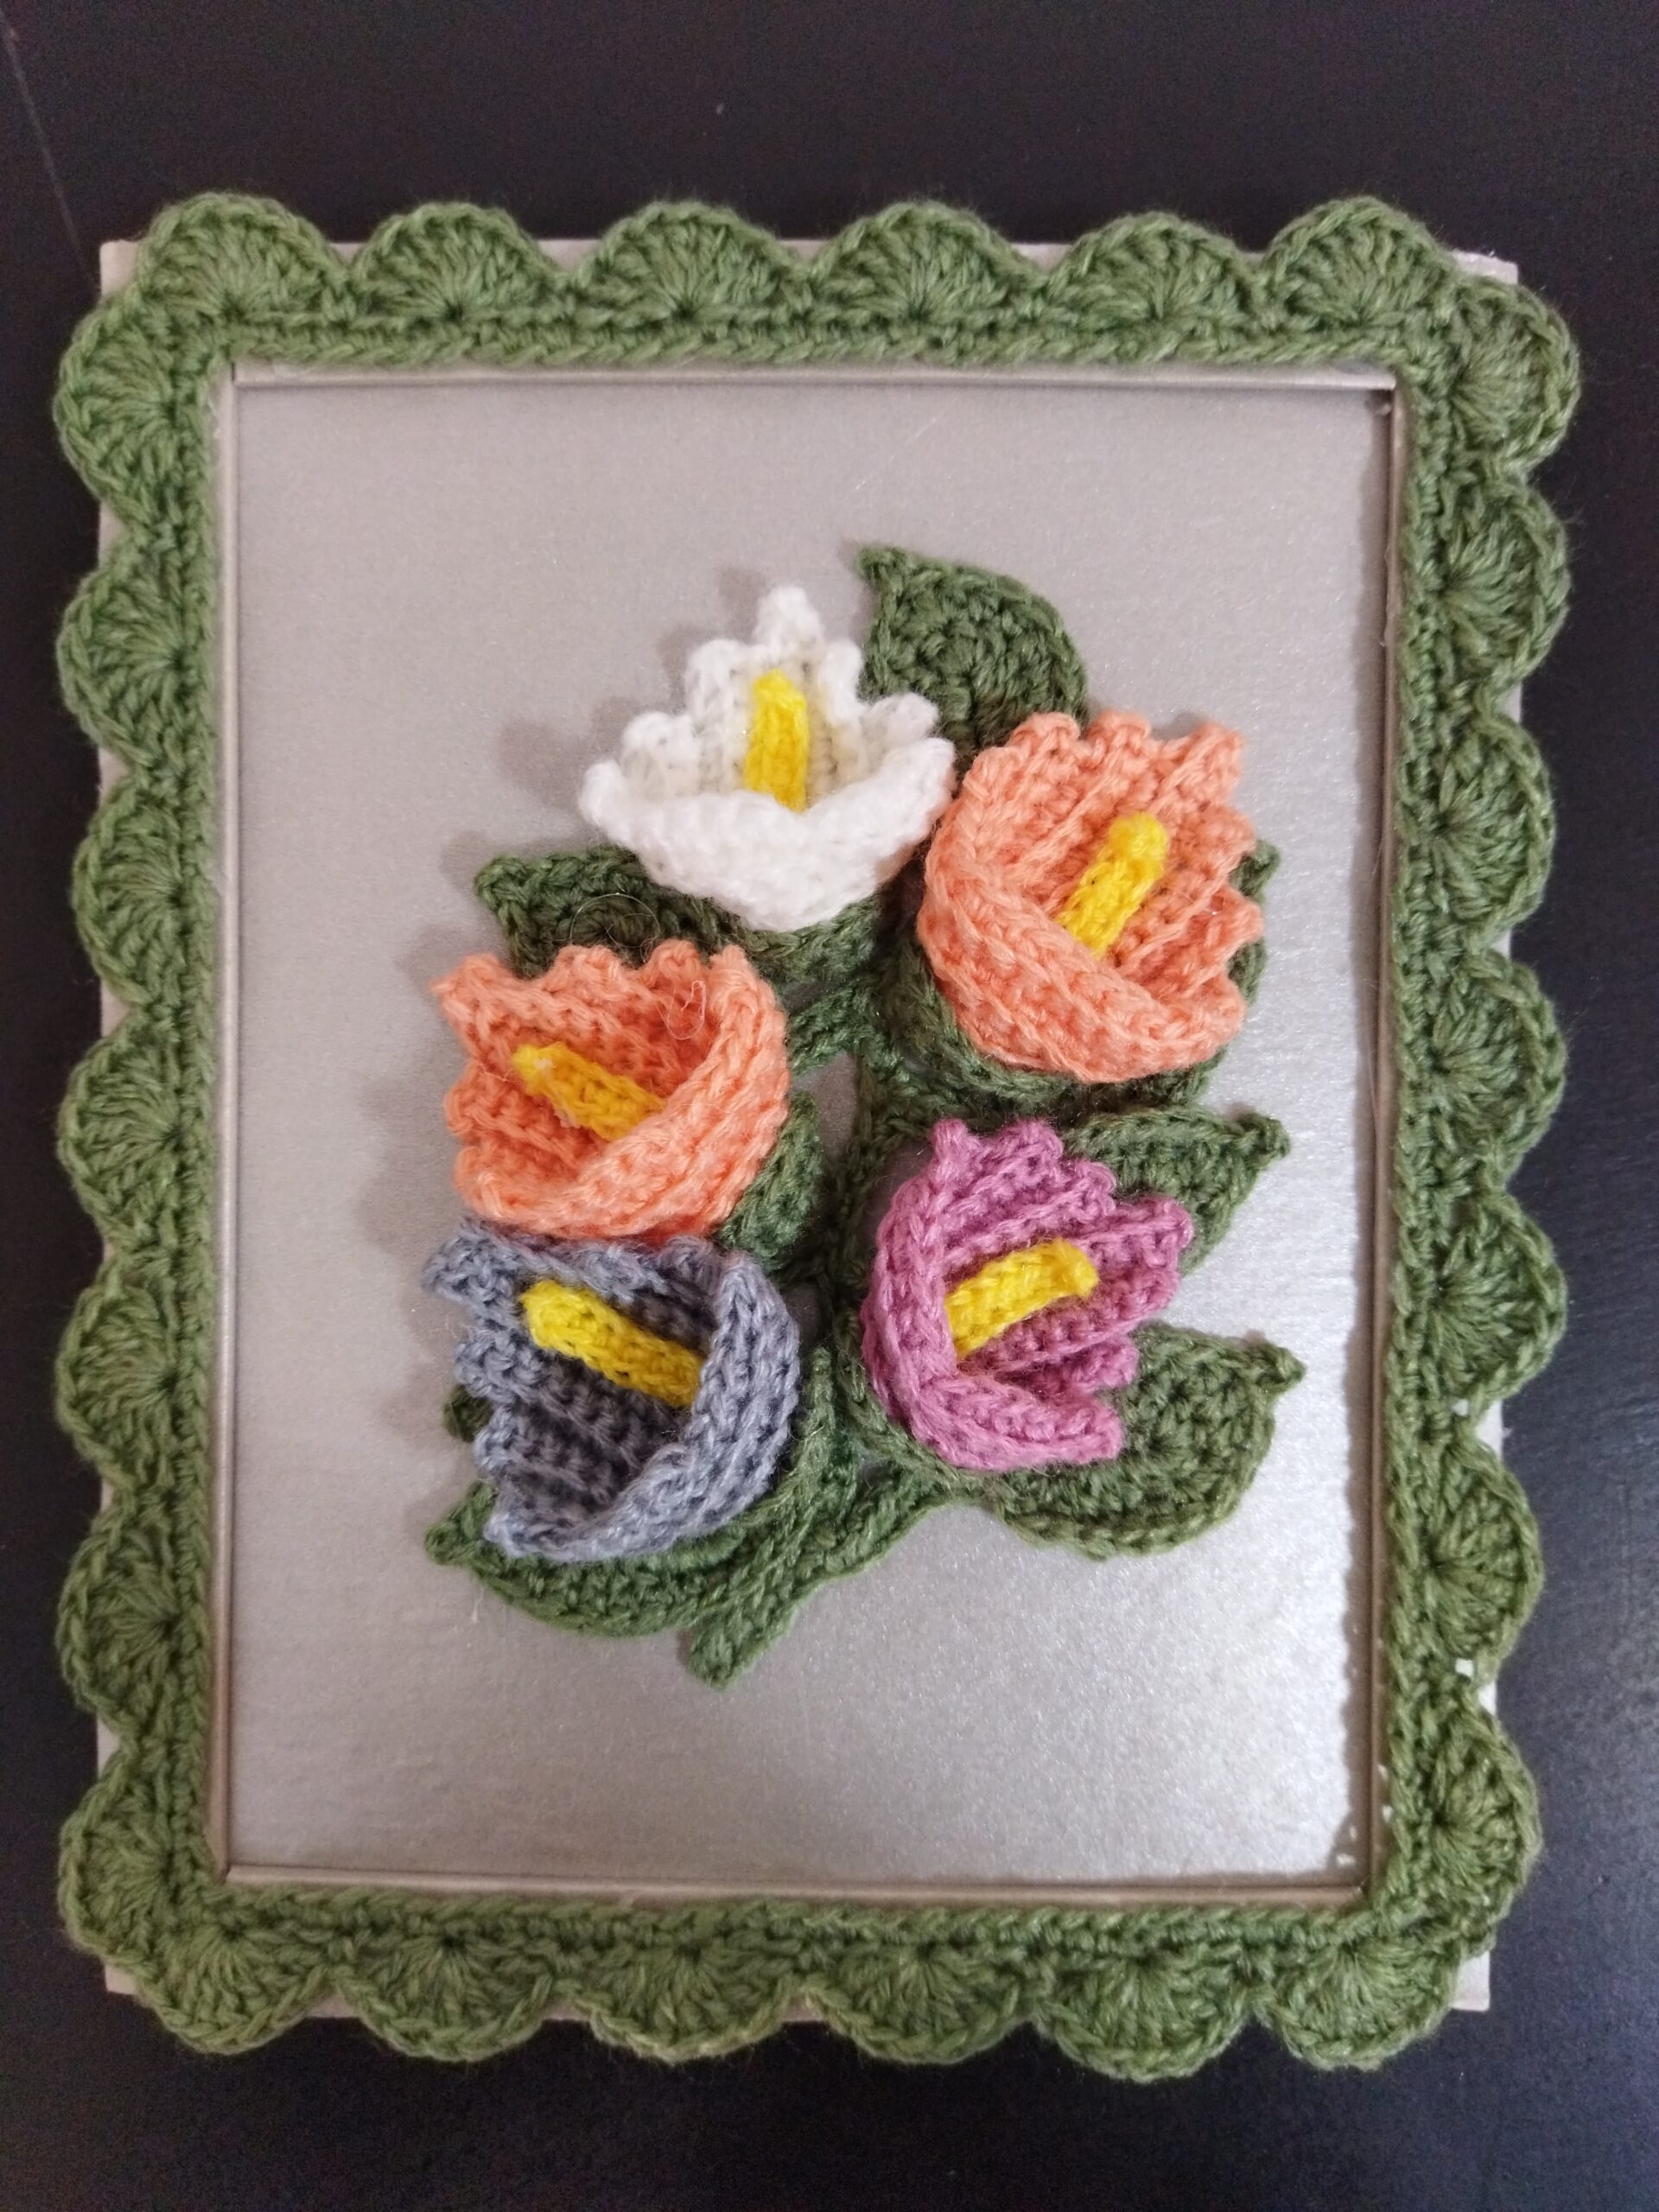 How to crochet easy flowers for beginners